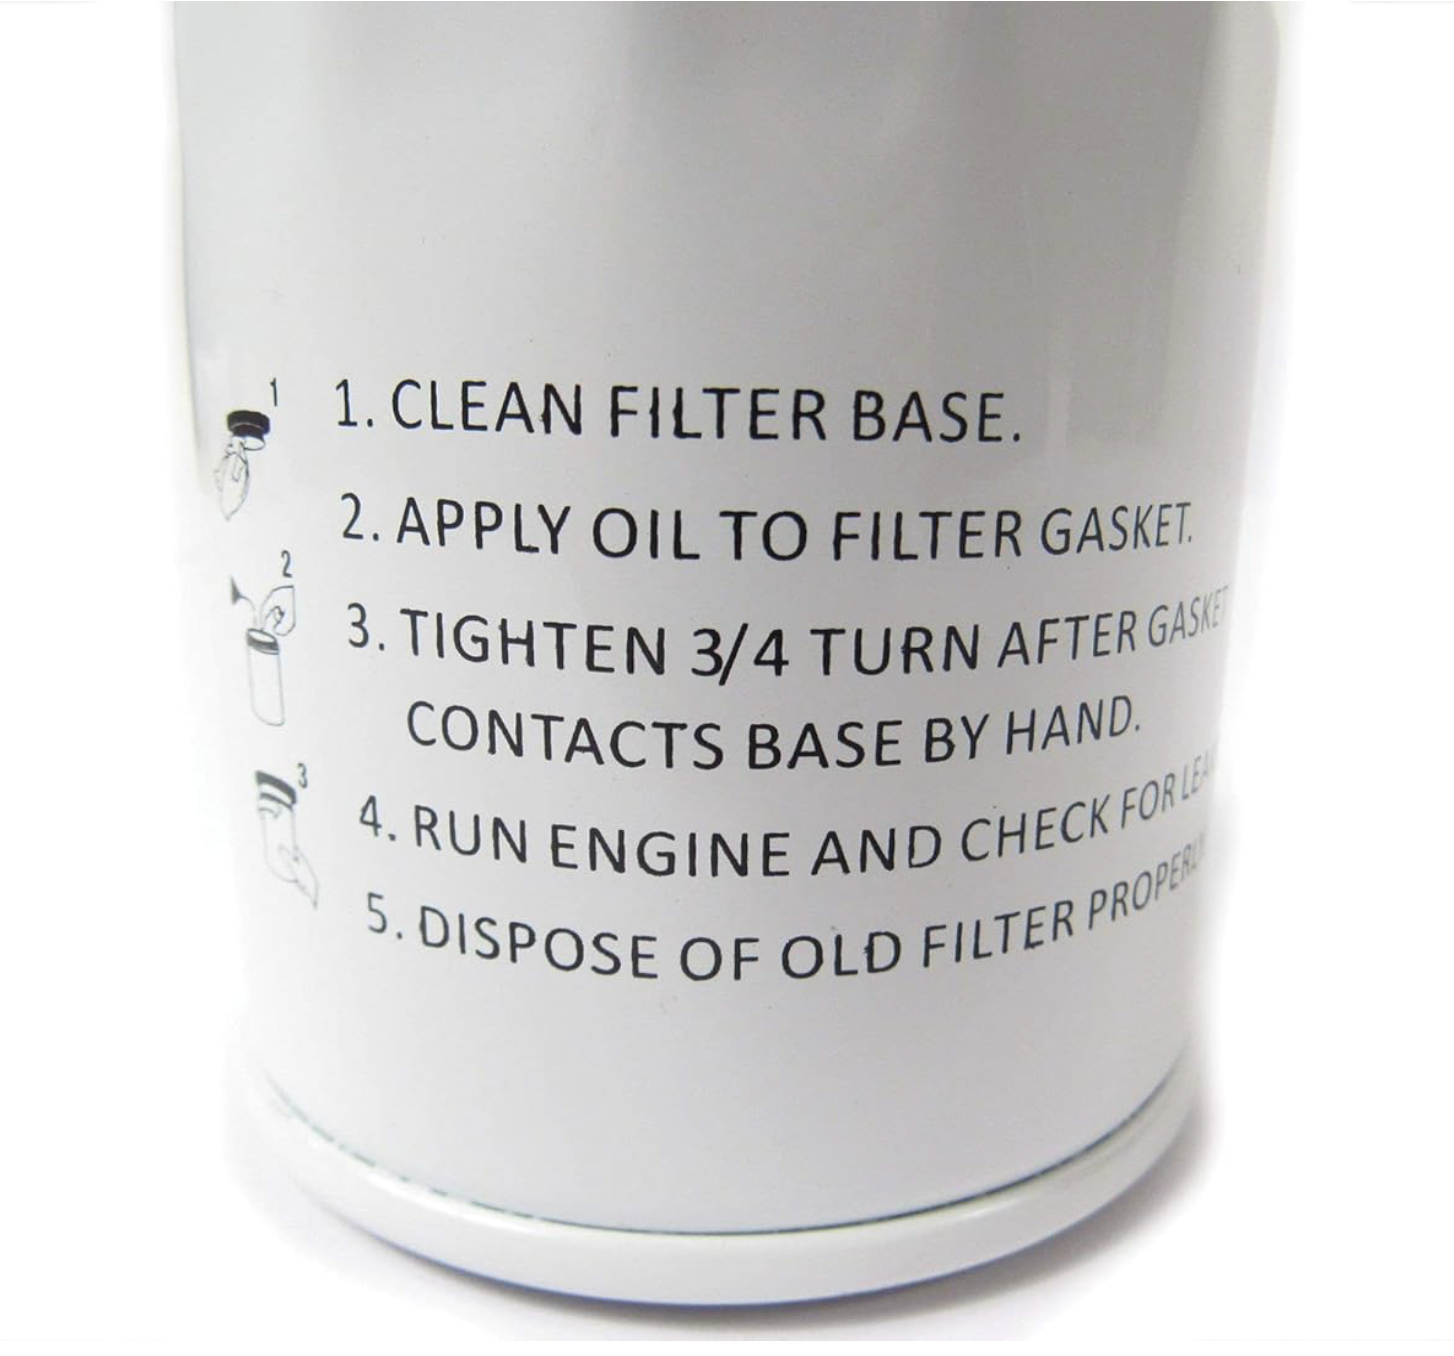 Land Rover Oil Filter